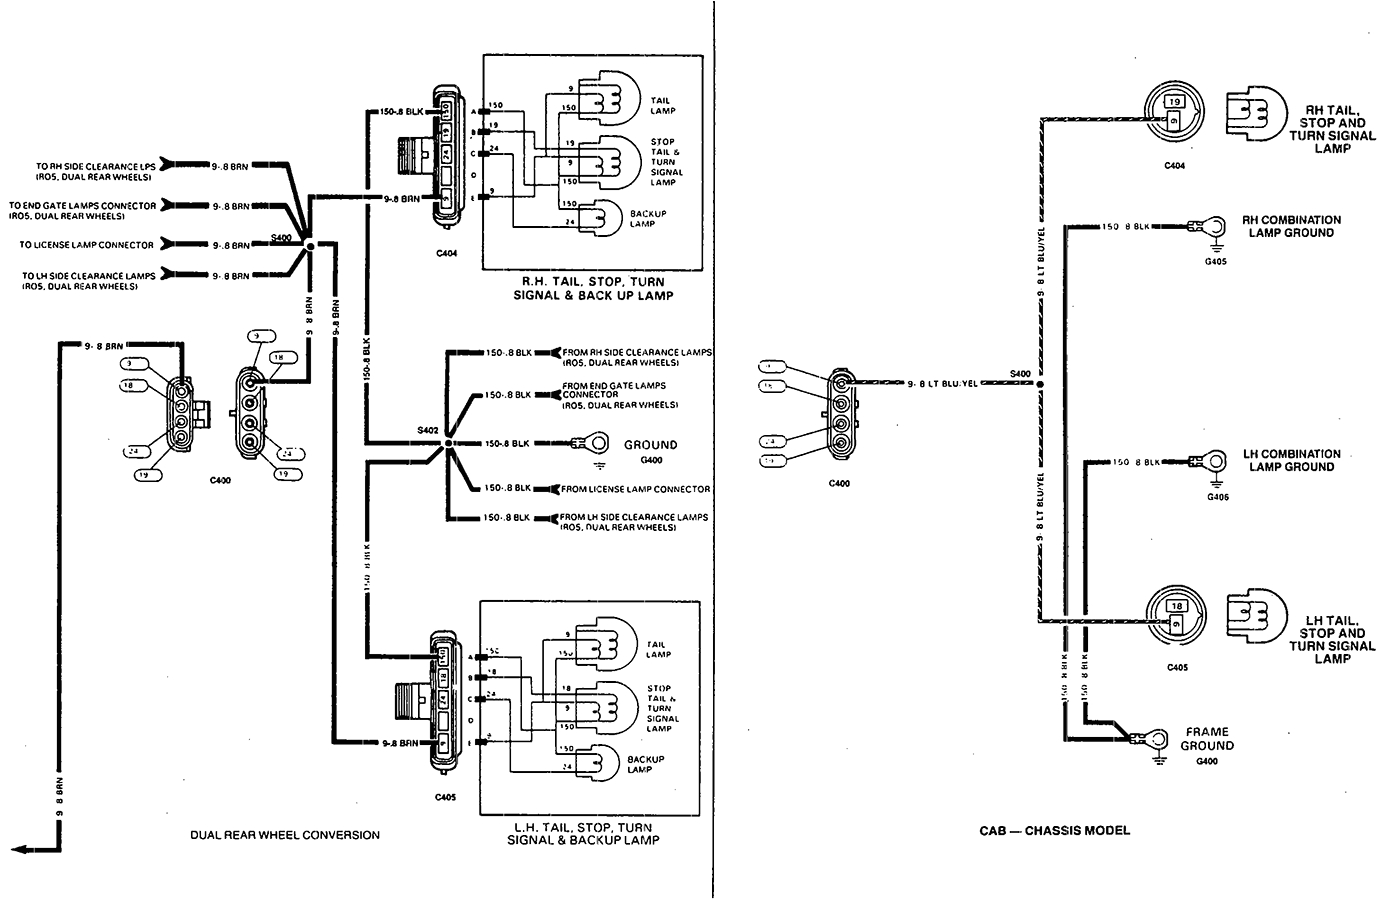 tail light wiring diagram 1995 chevy truck elegant 2003 chevy silverado tail light wiring diagram collection jpg